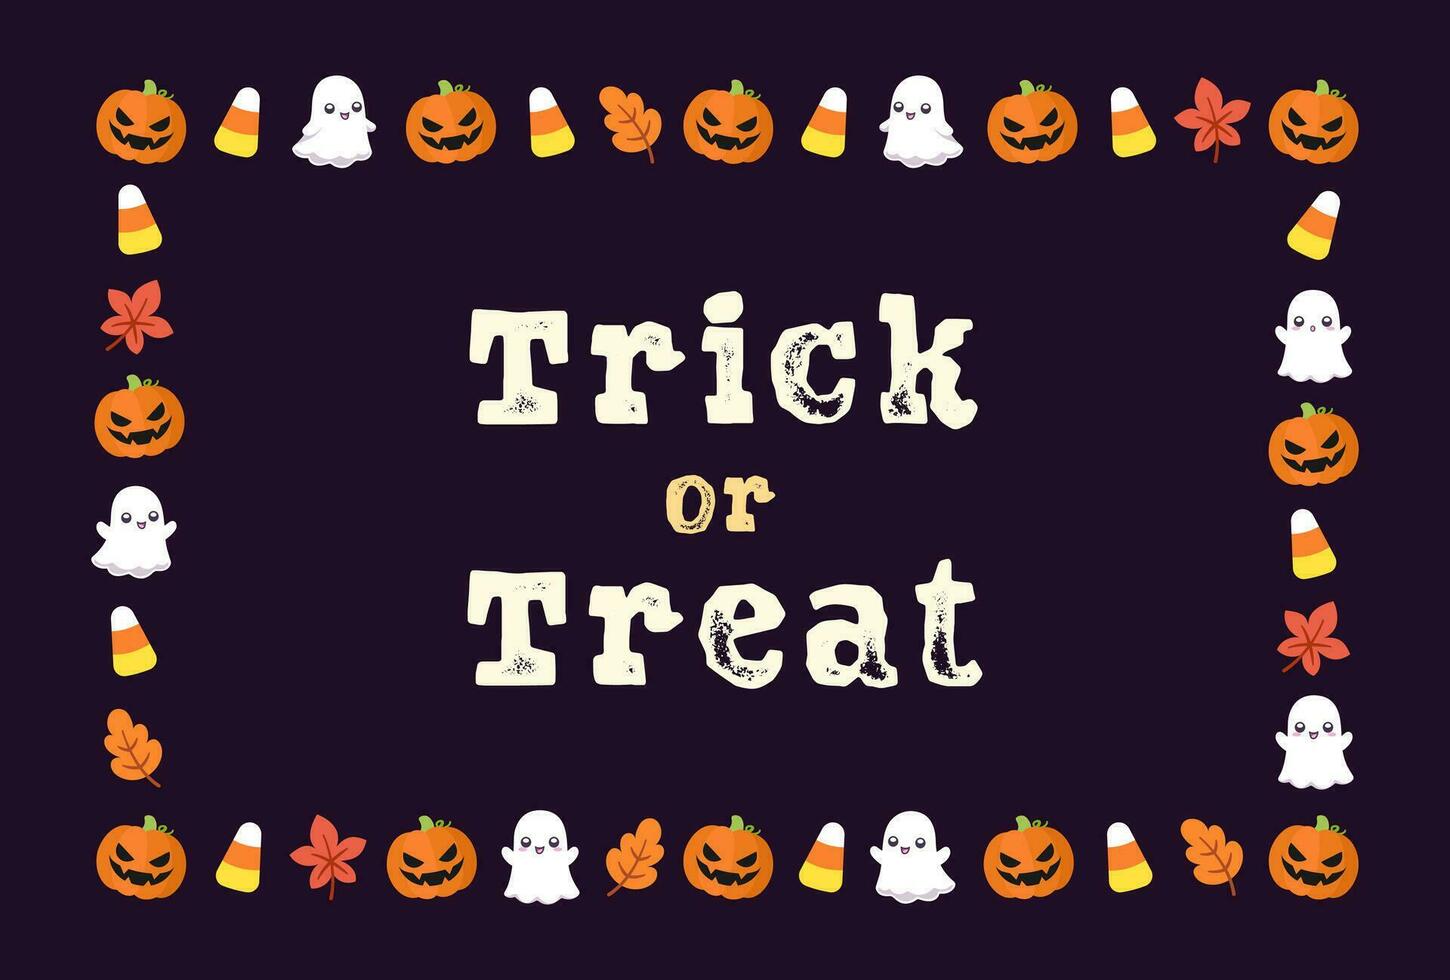 Cute Trick or Treat Halloween card frame template. Rectangle Halloween border design with cartoon ghost, jack o lantern, pumpkins, candy corn. Social media banner vector illustration